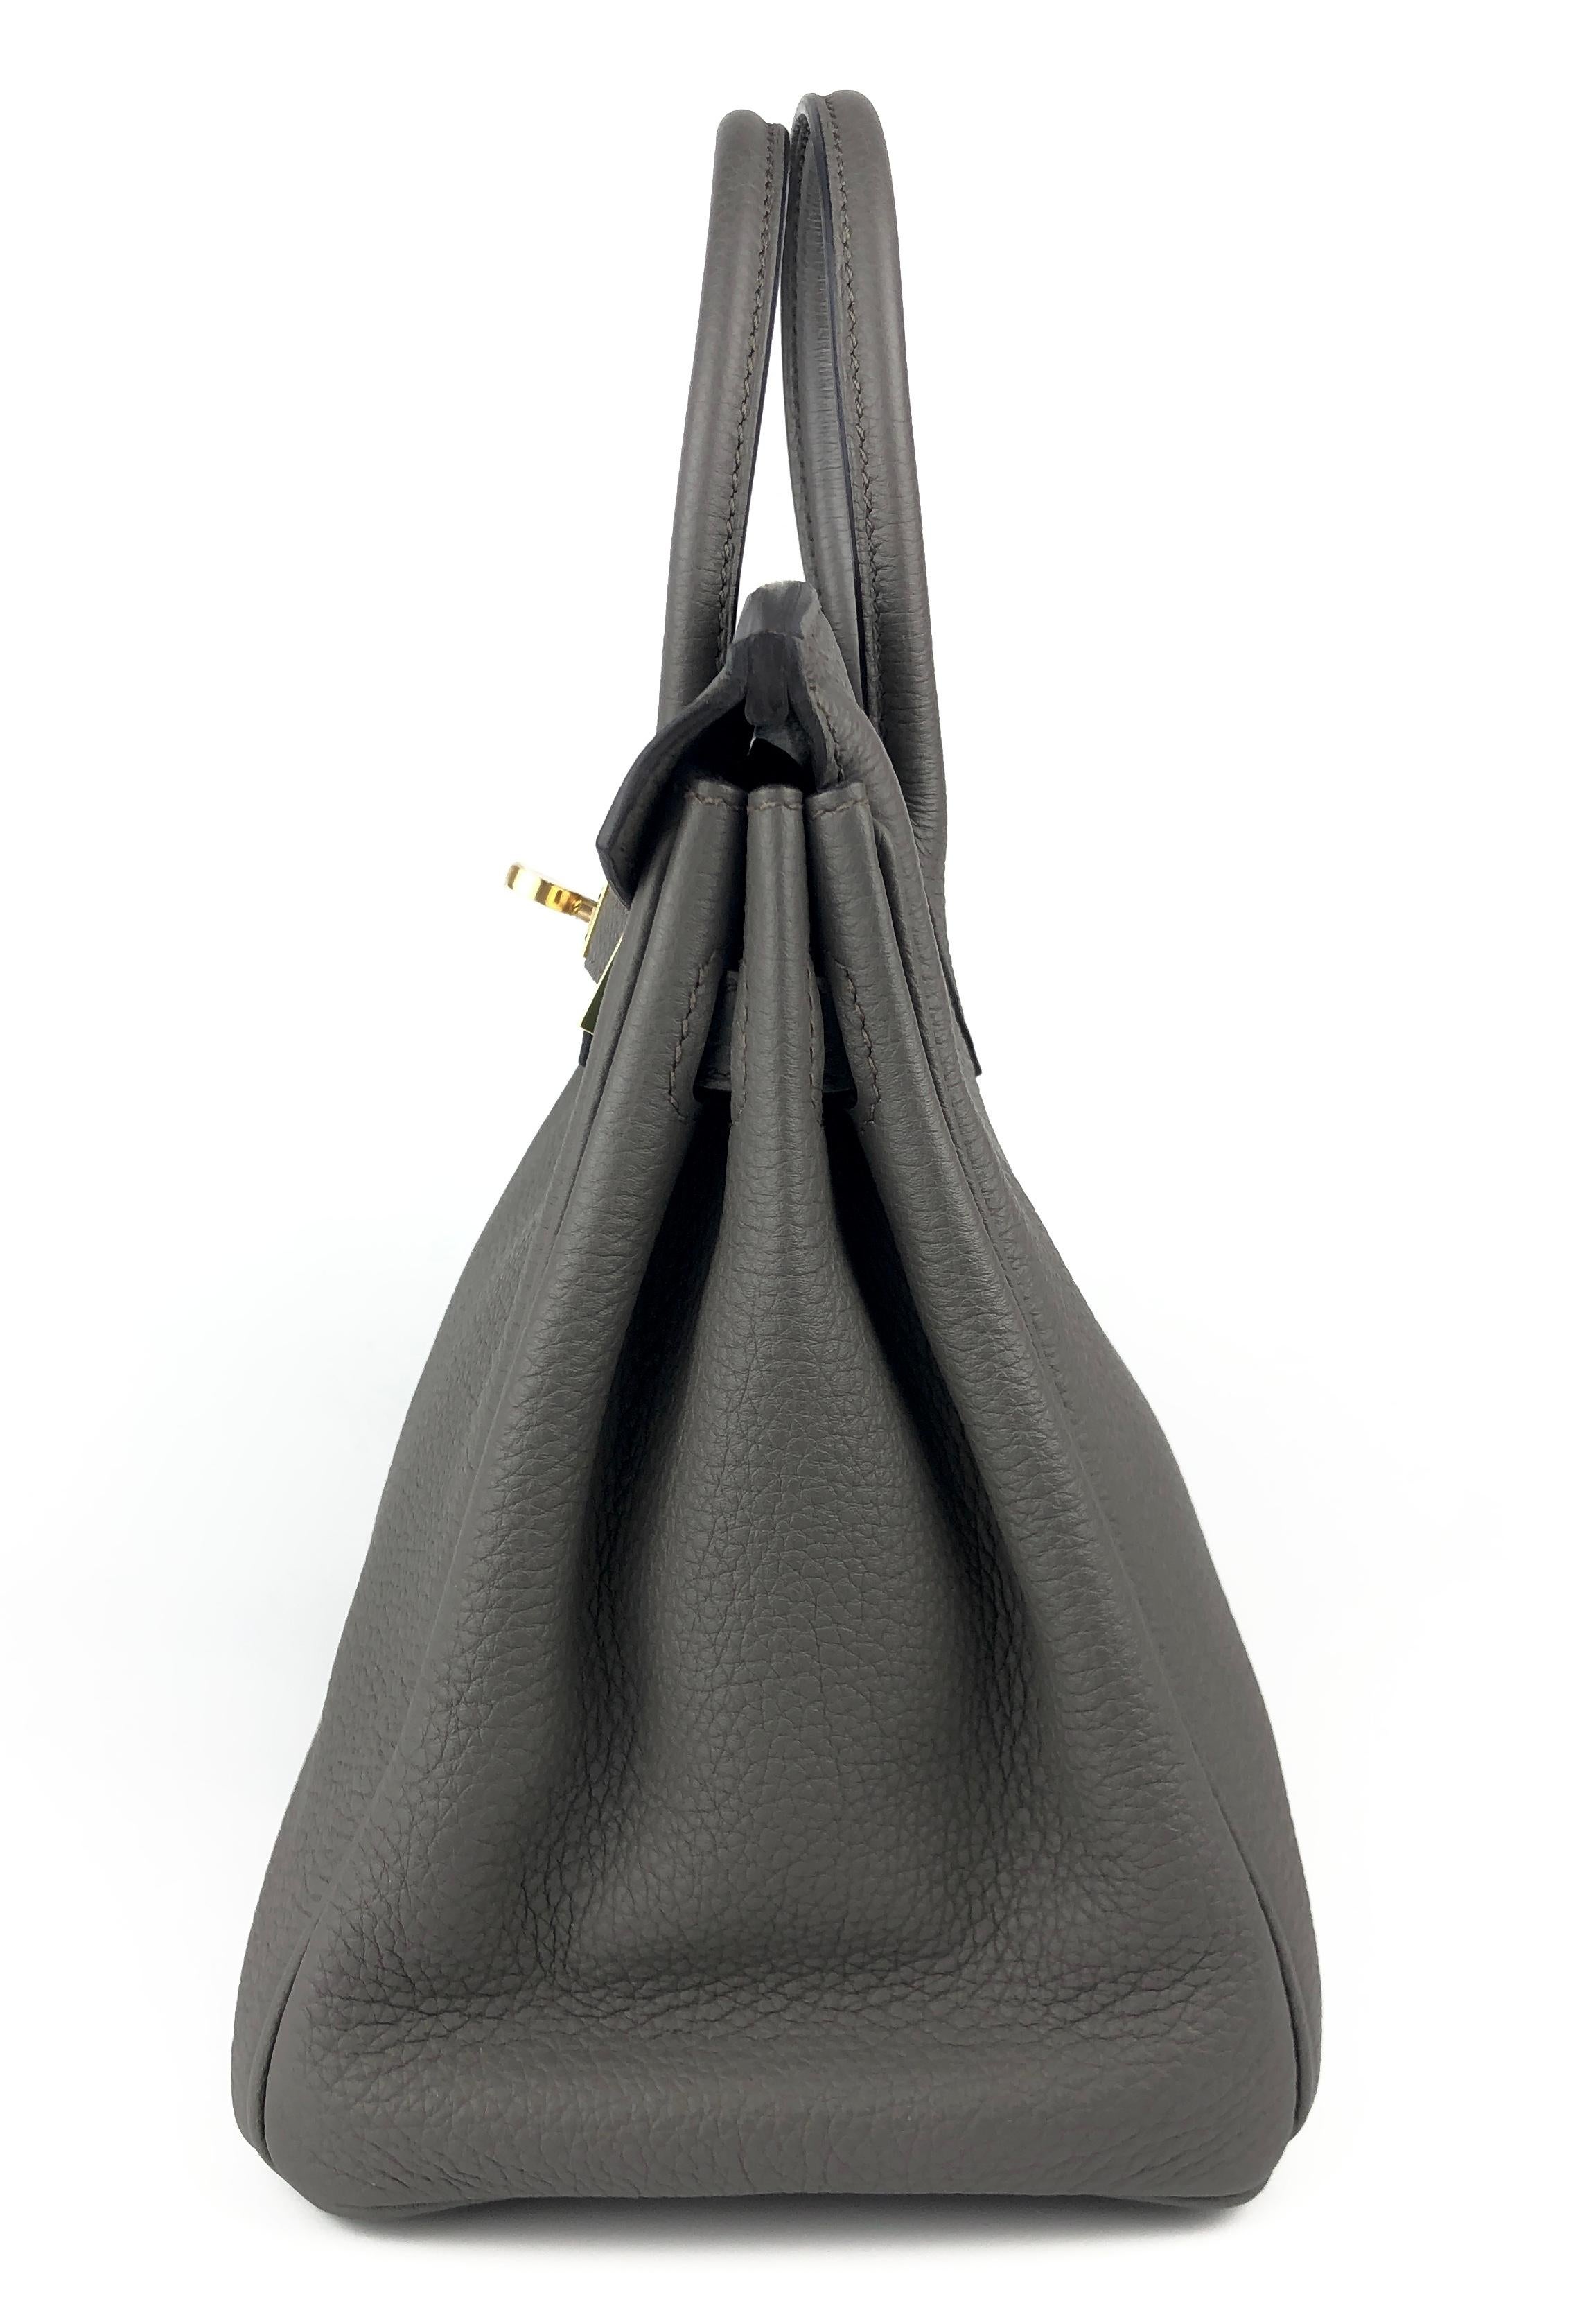 Hermes Birkin 25 Etain Gray Togo Leather Handbag Gold Hardware 2020 For Sale 4